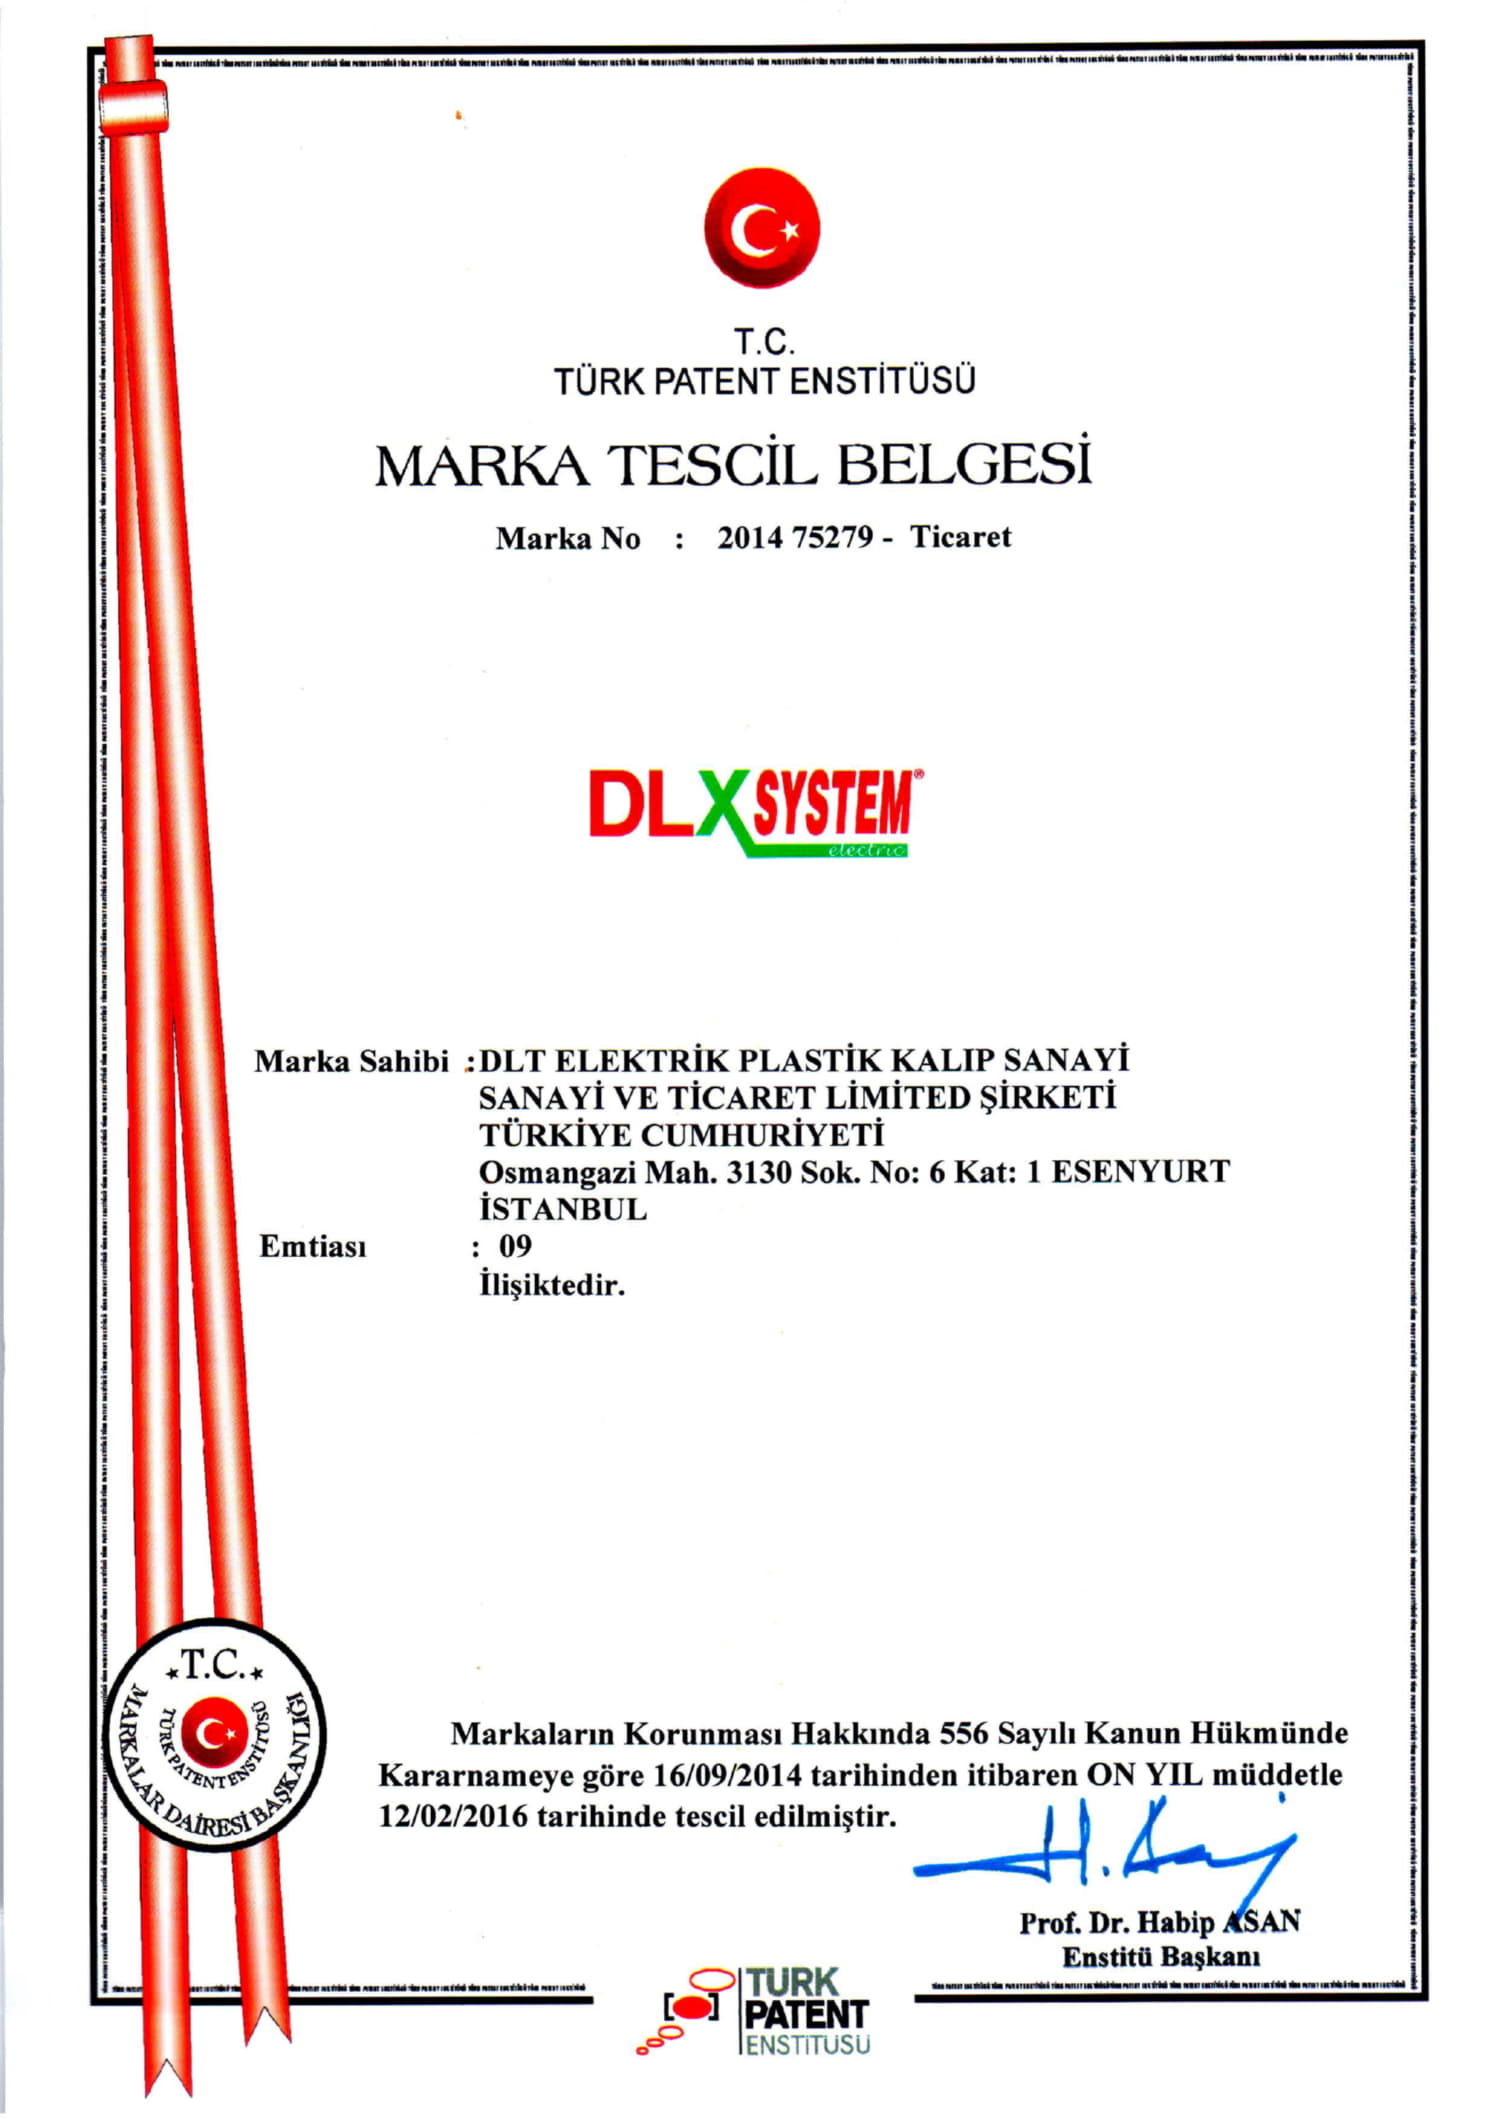 MARKA TESCİL-DLX SYSTEM